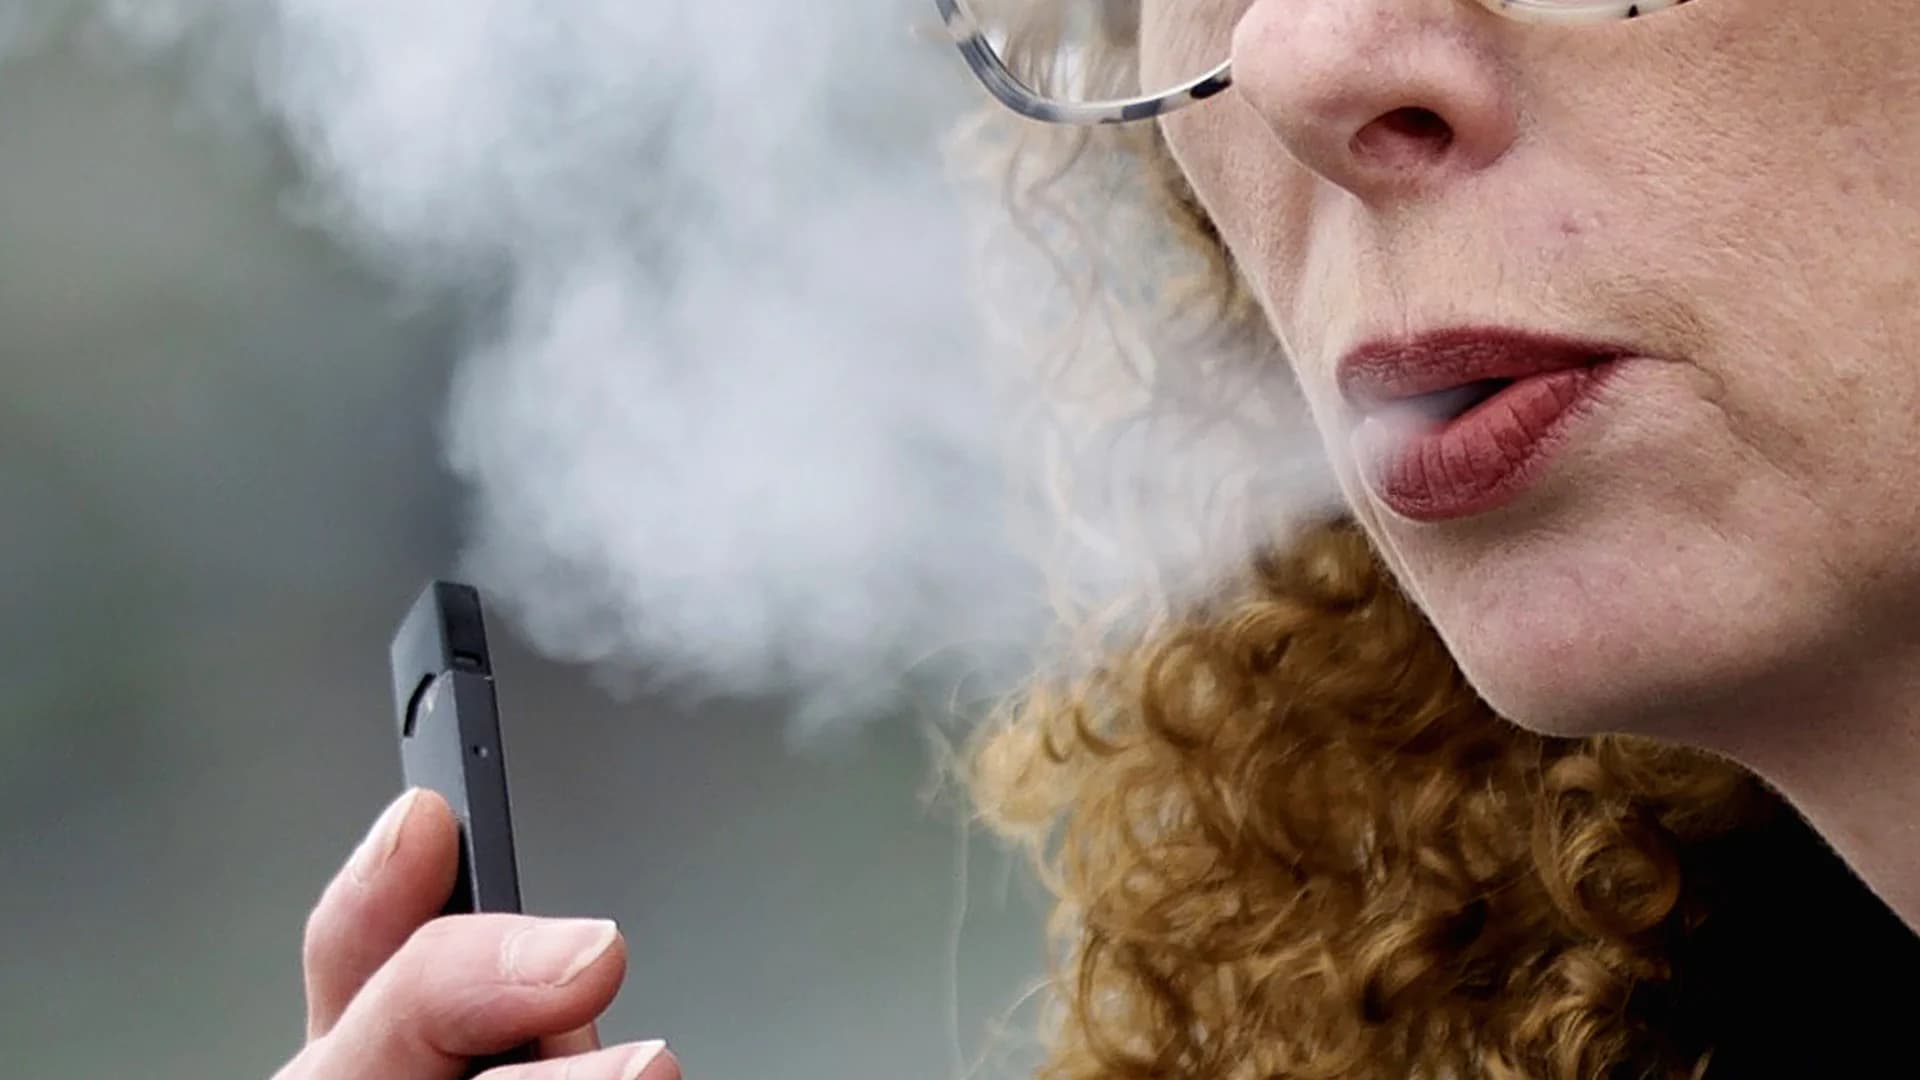 Juul can keep selling e-cigarettes as court blocks FDA ban